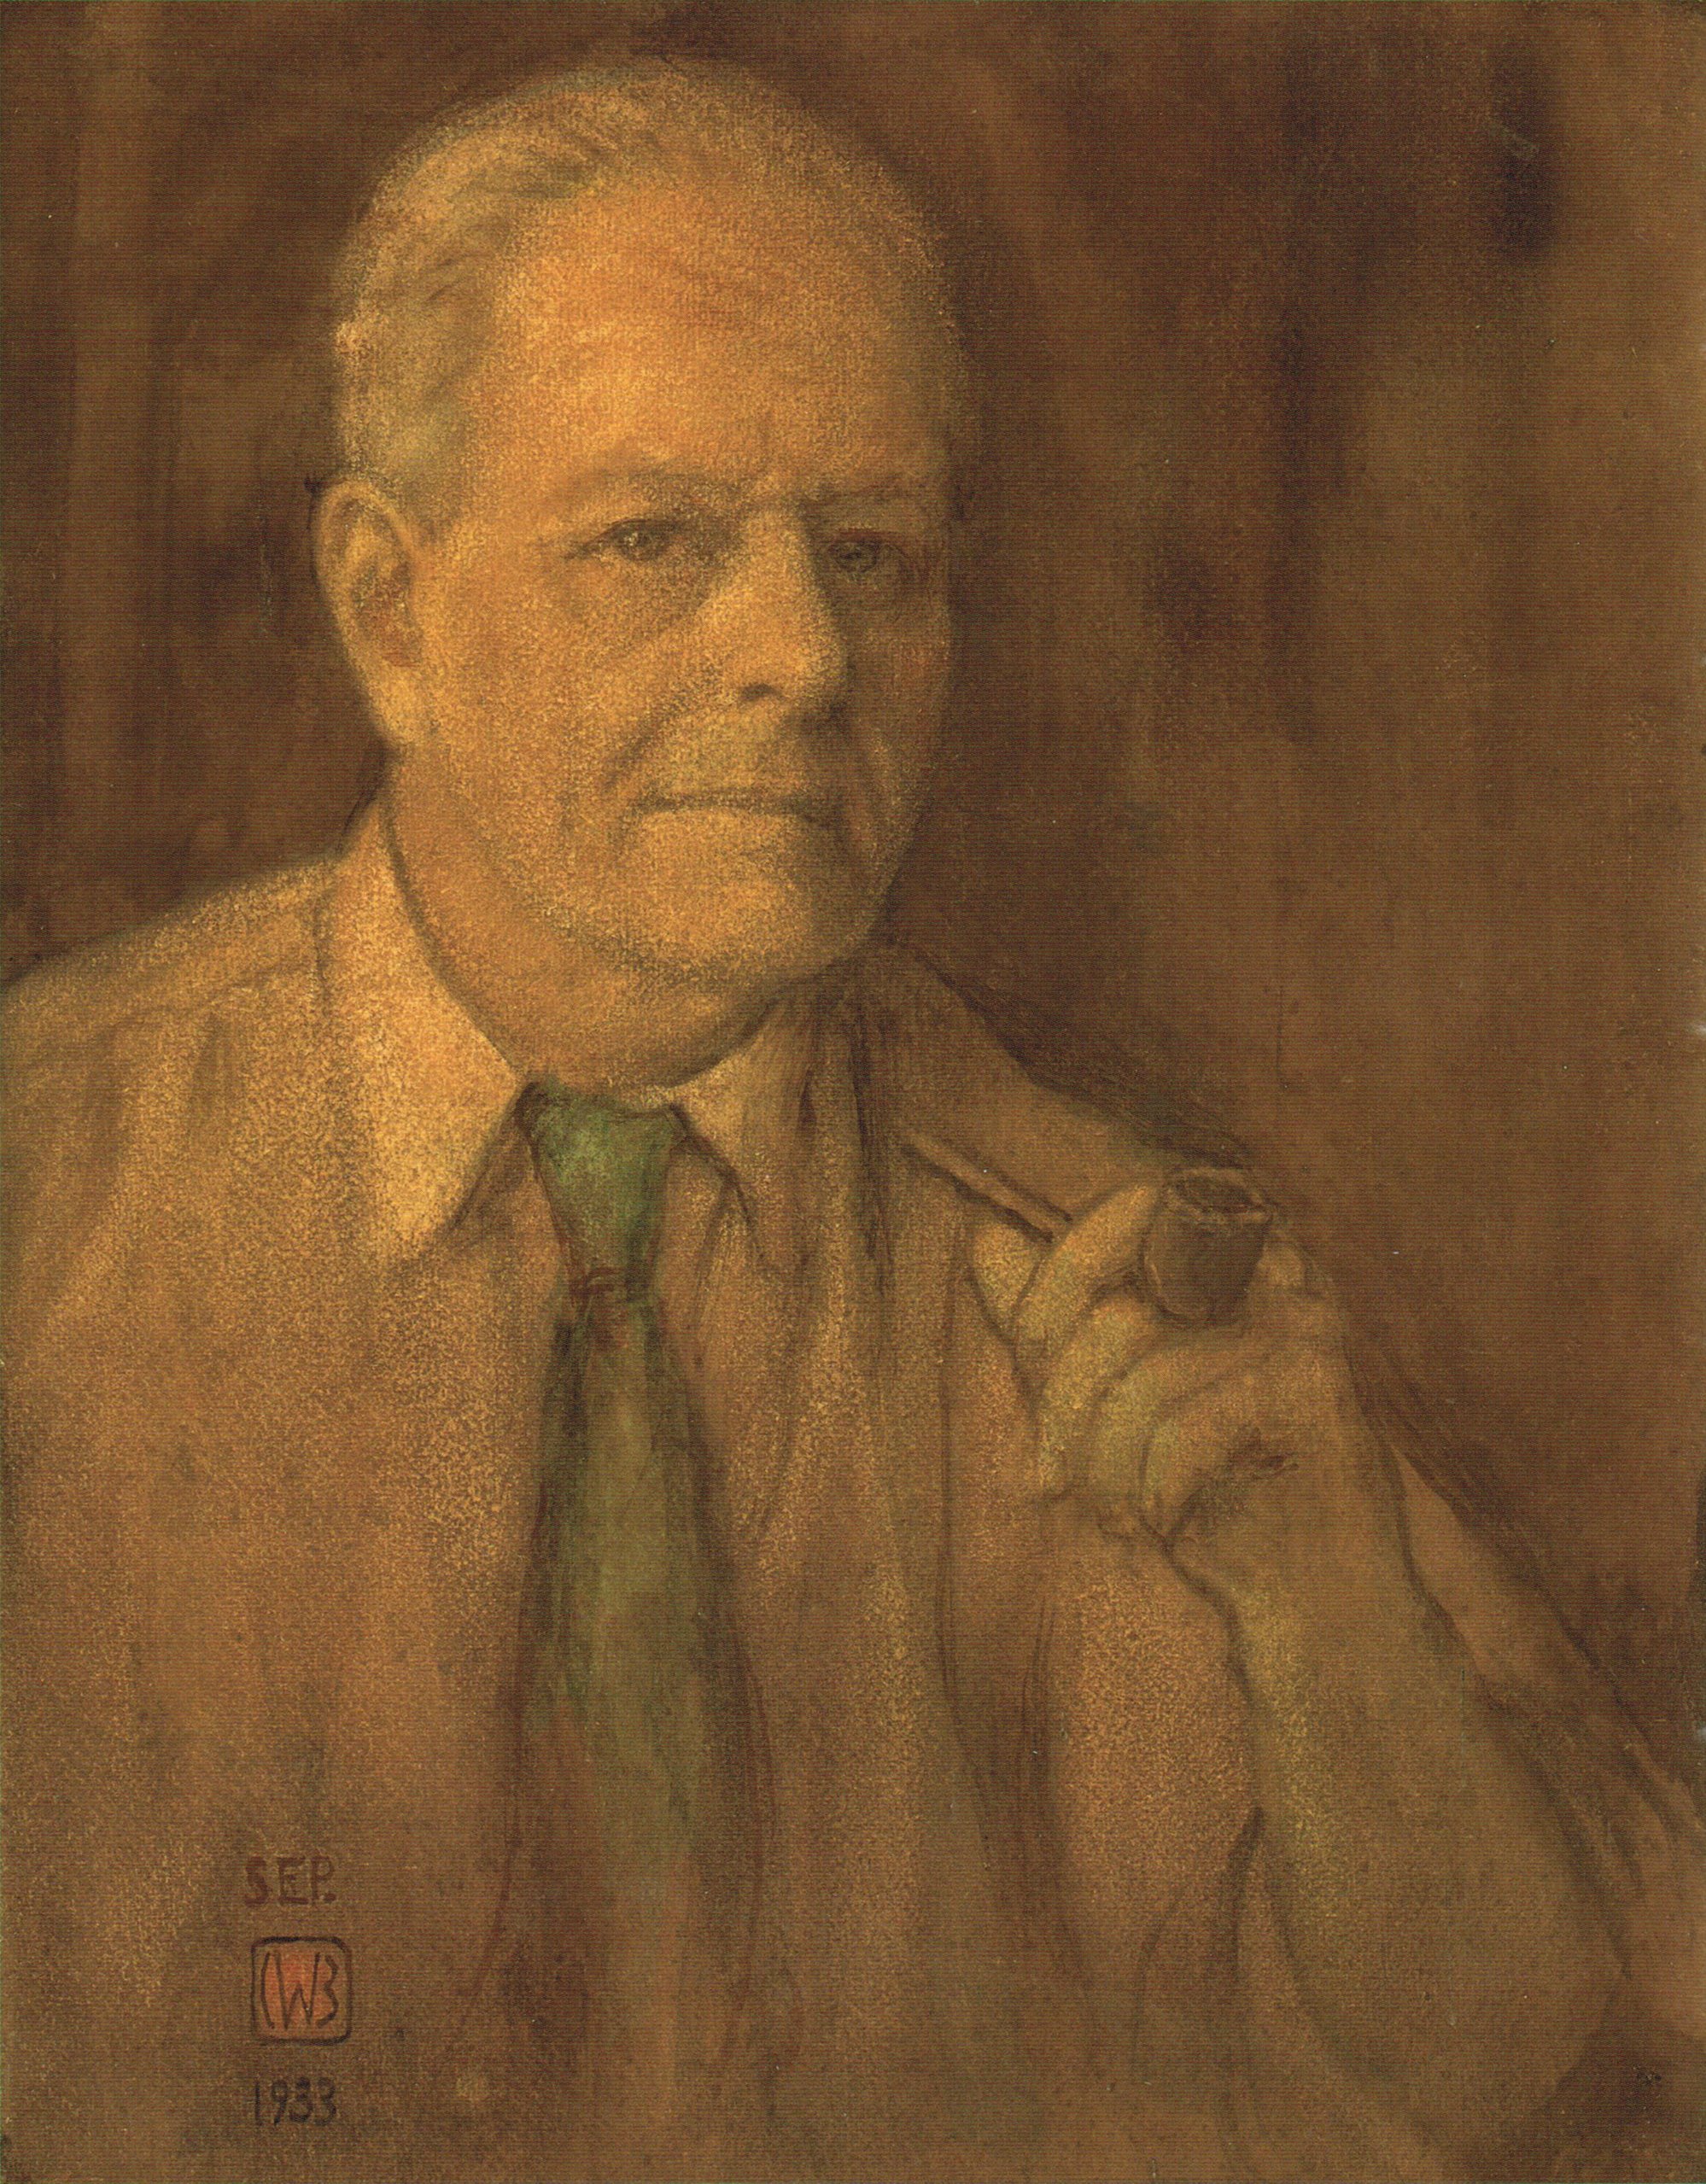 Charles W. Bartlett